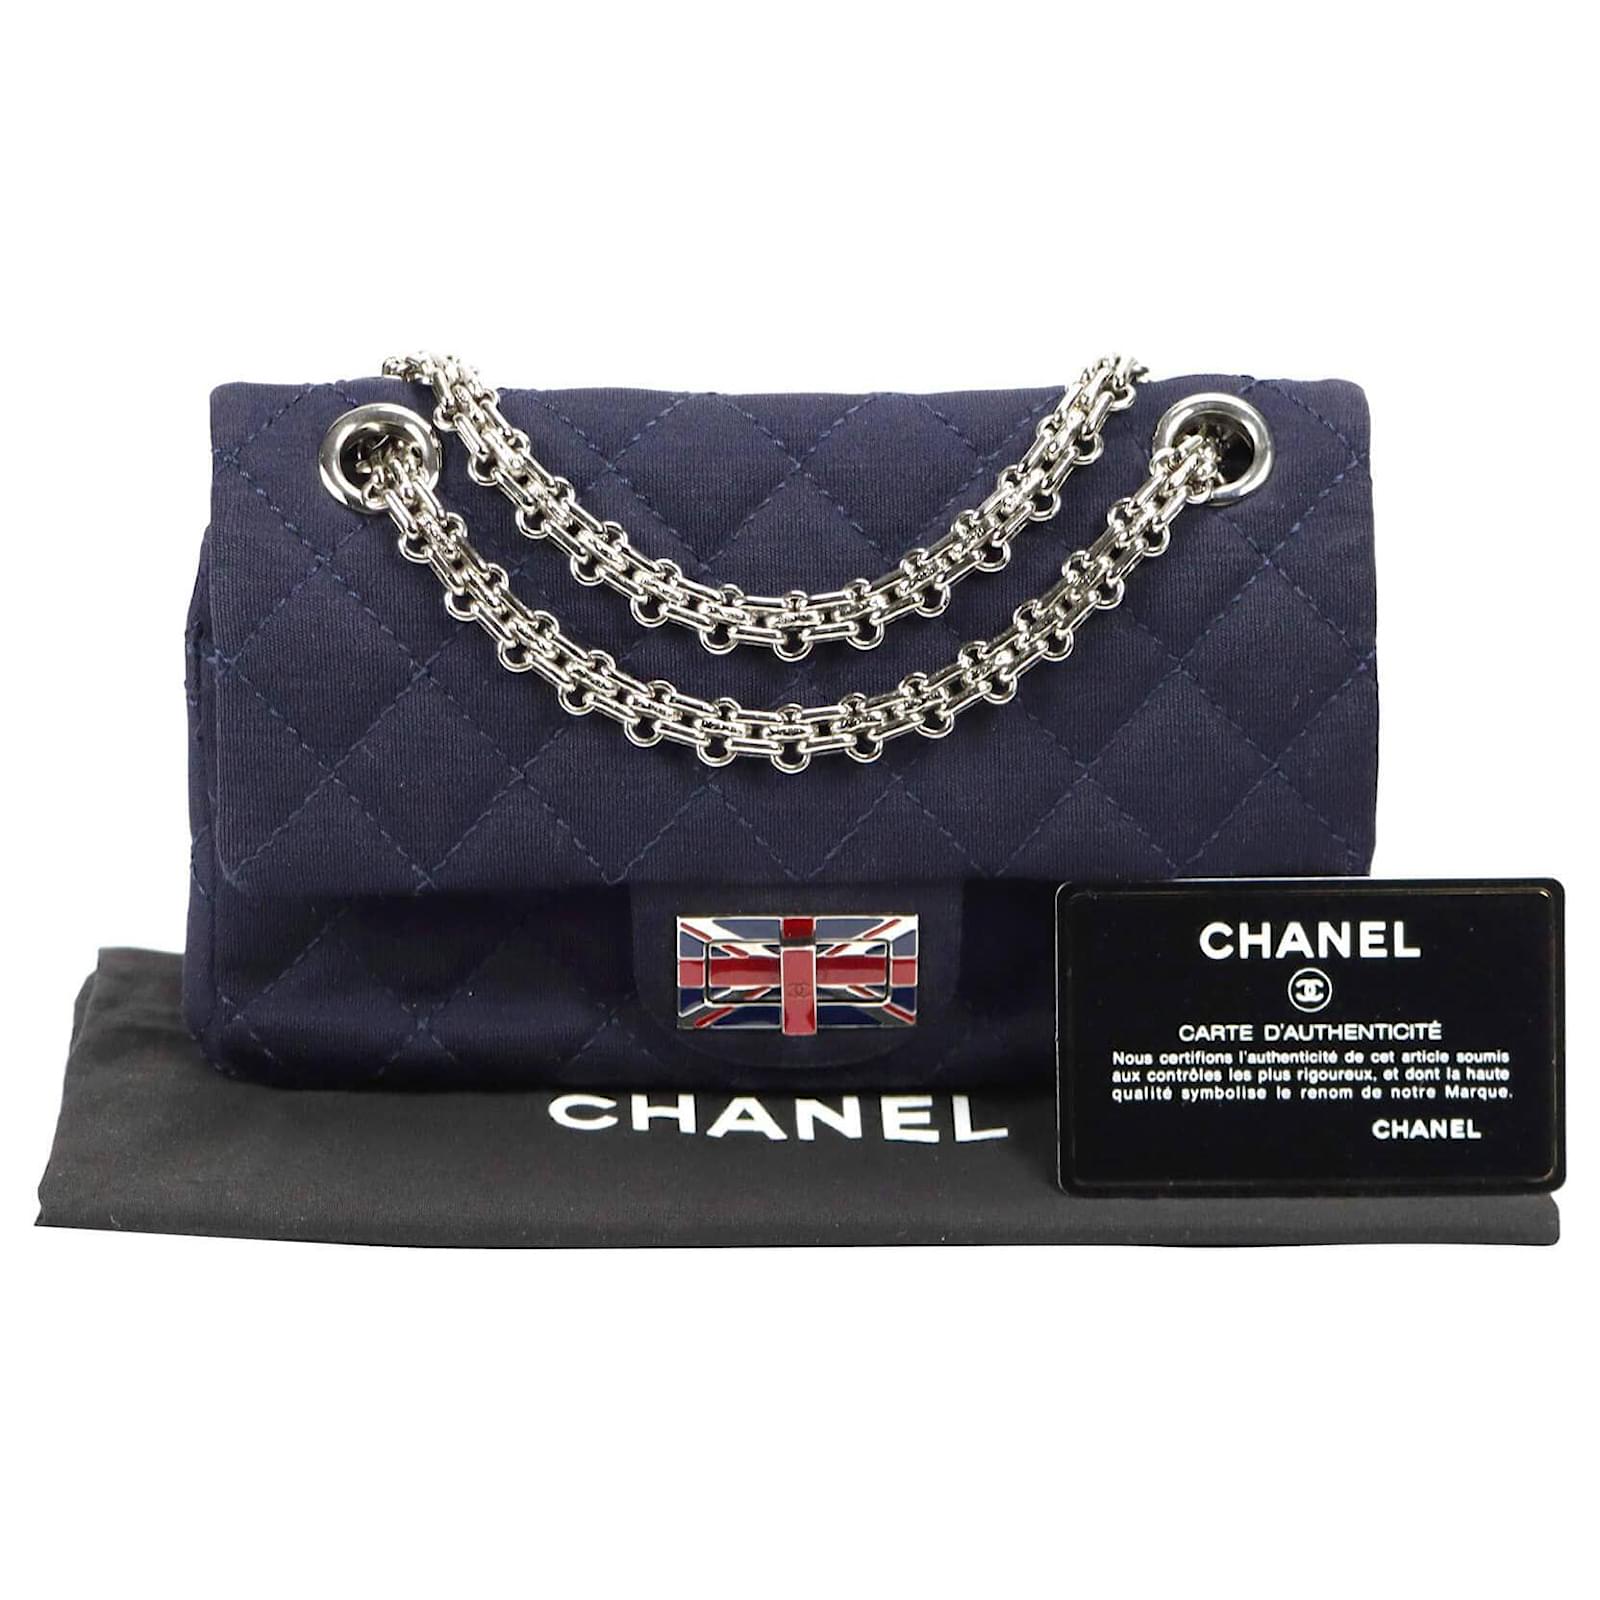 Sell Chanel Union Jack Reissue 224 Flap Bag - Black/Blue